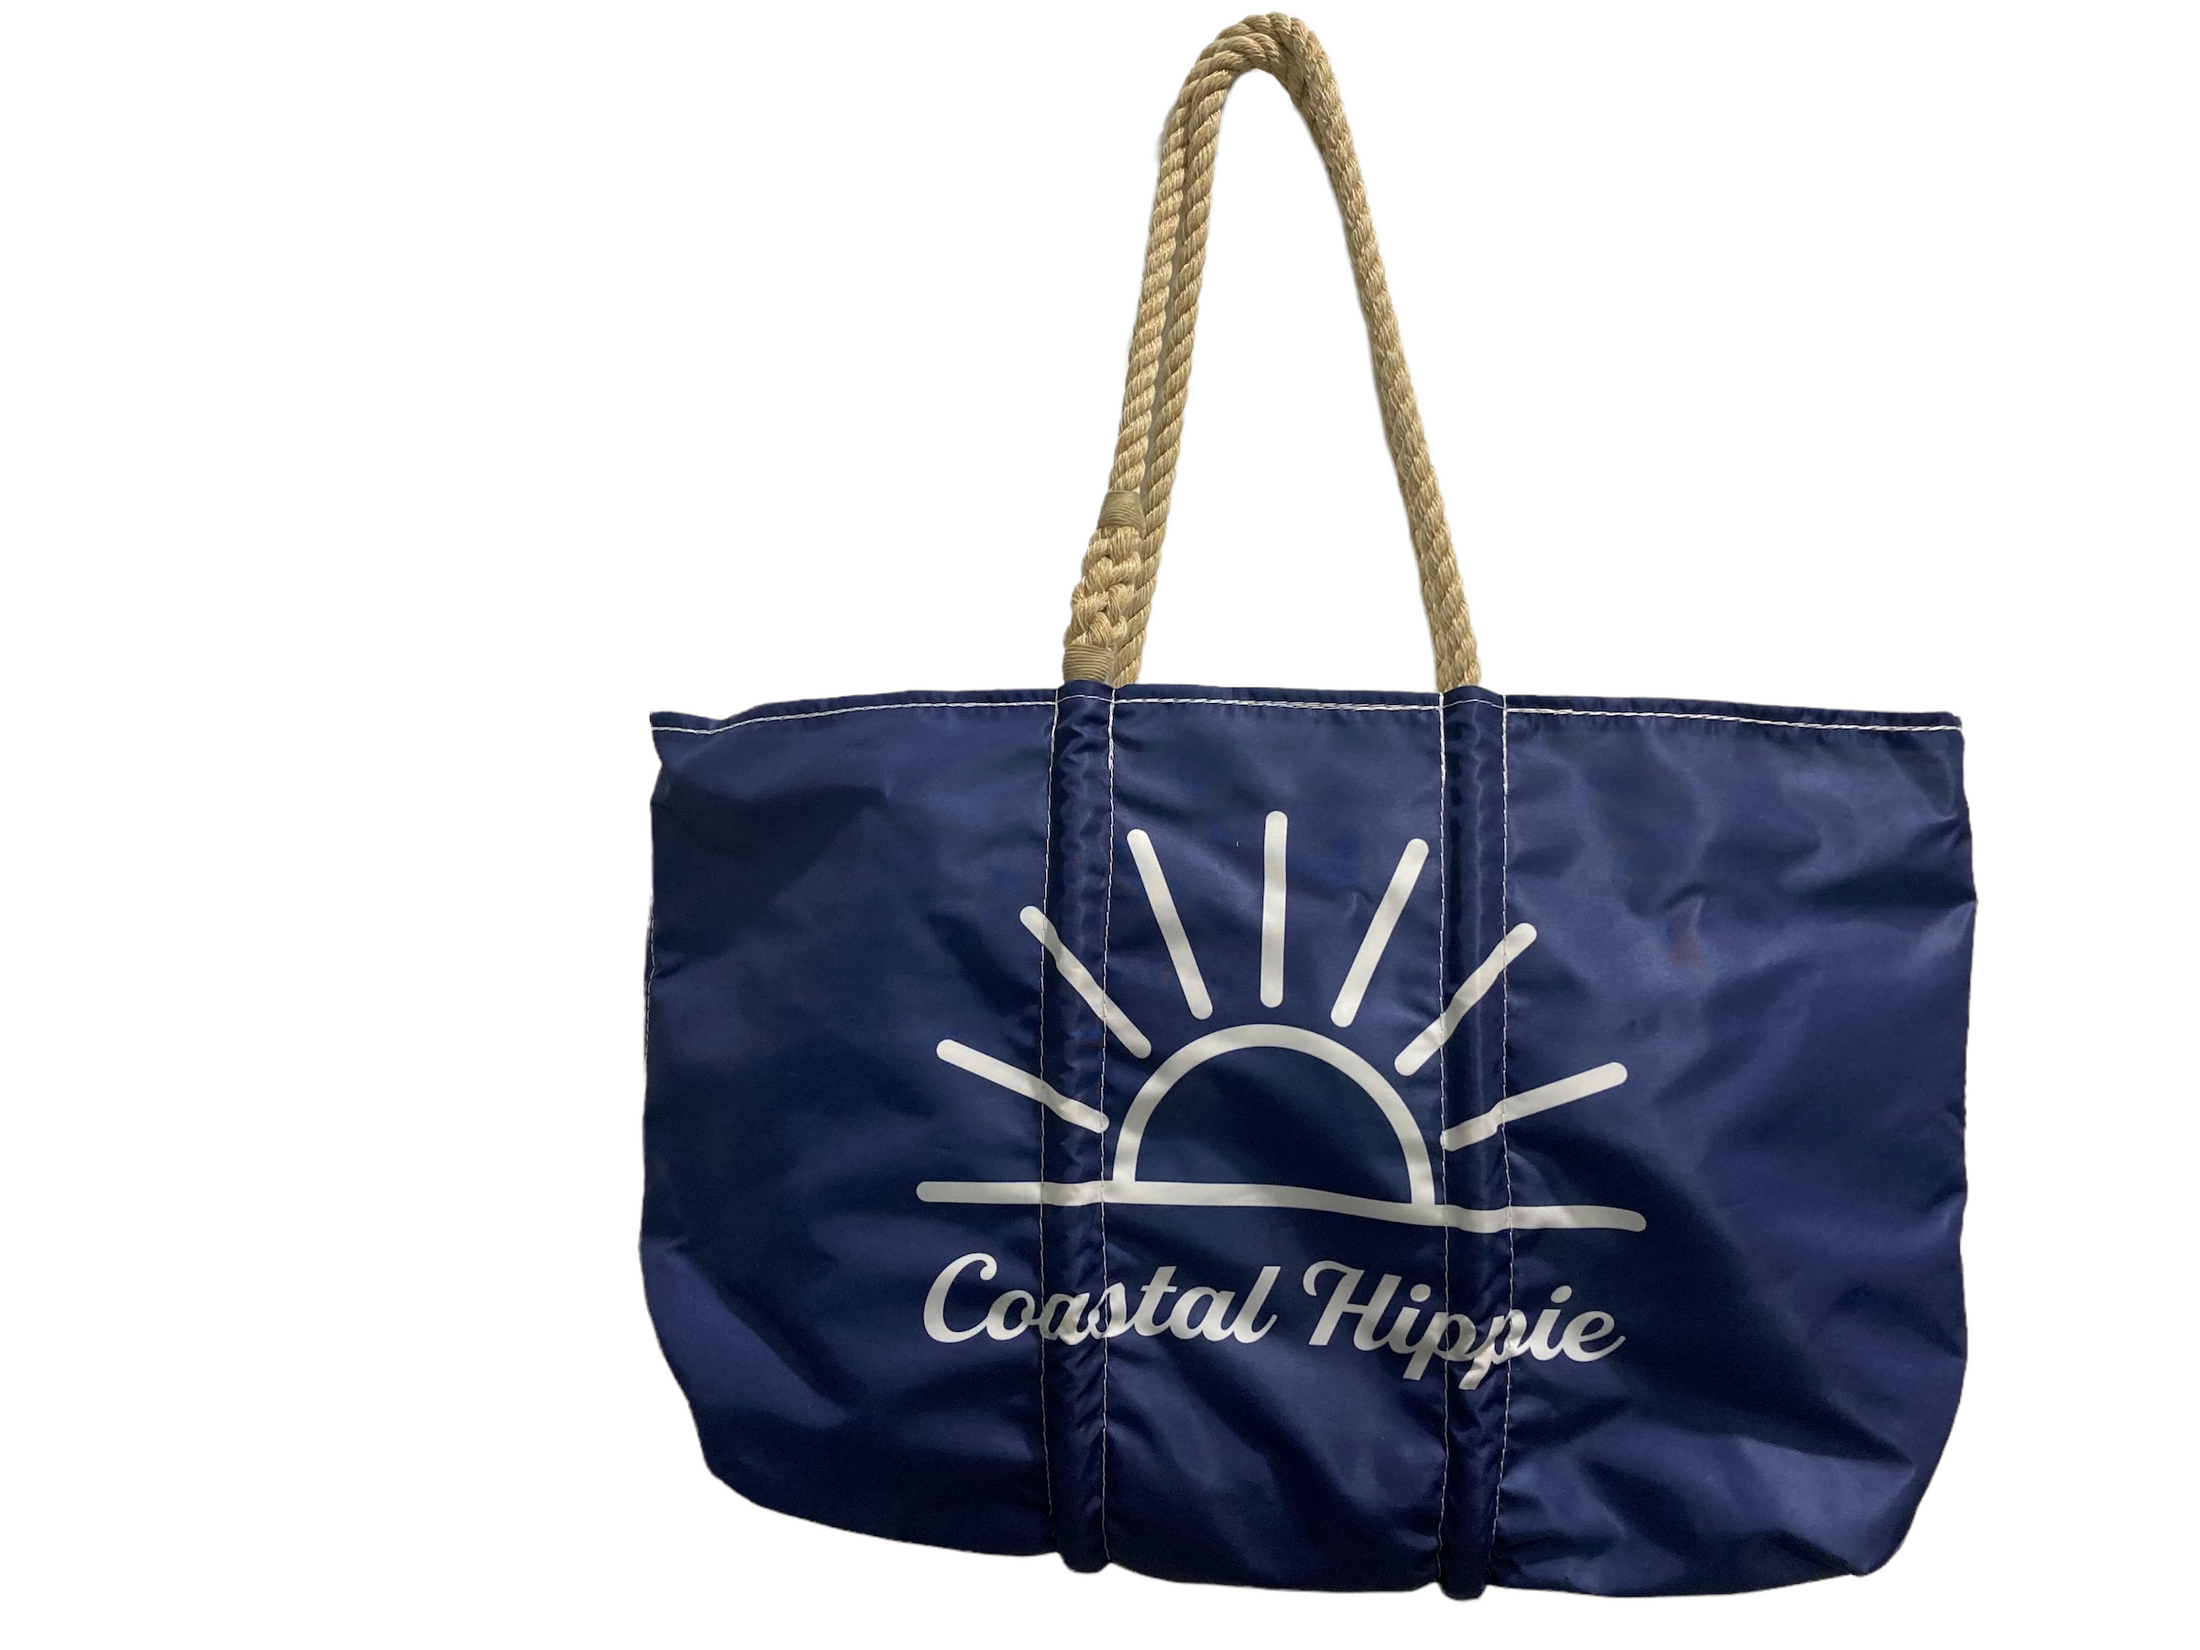 Coastal Hippie Tote